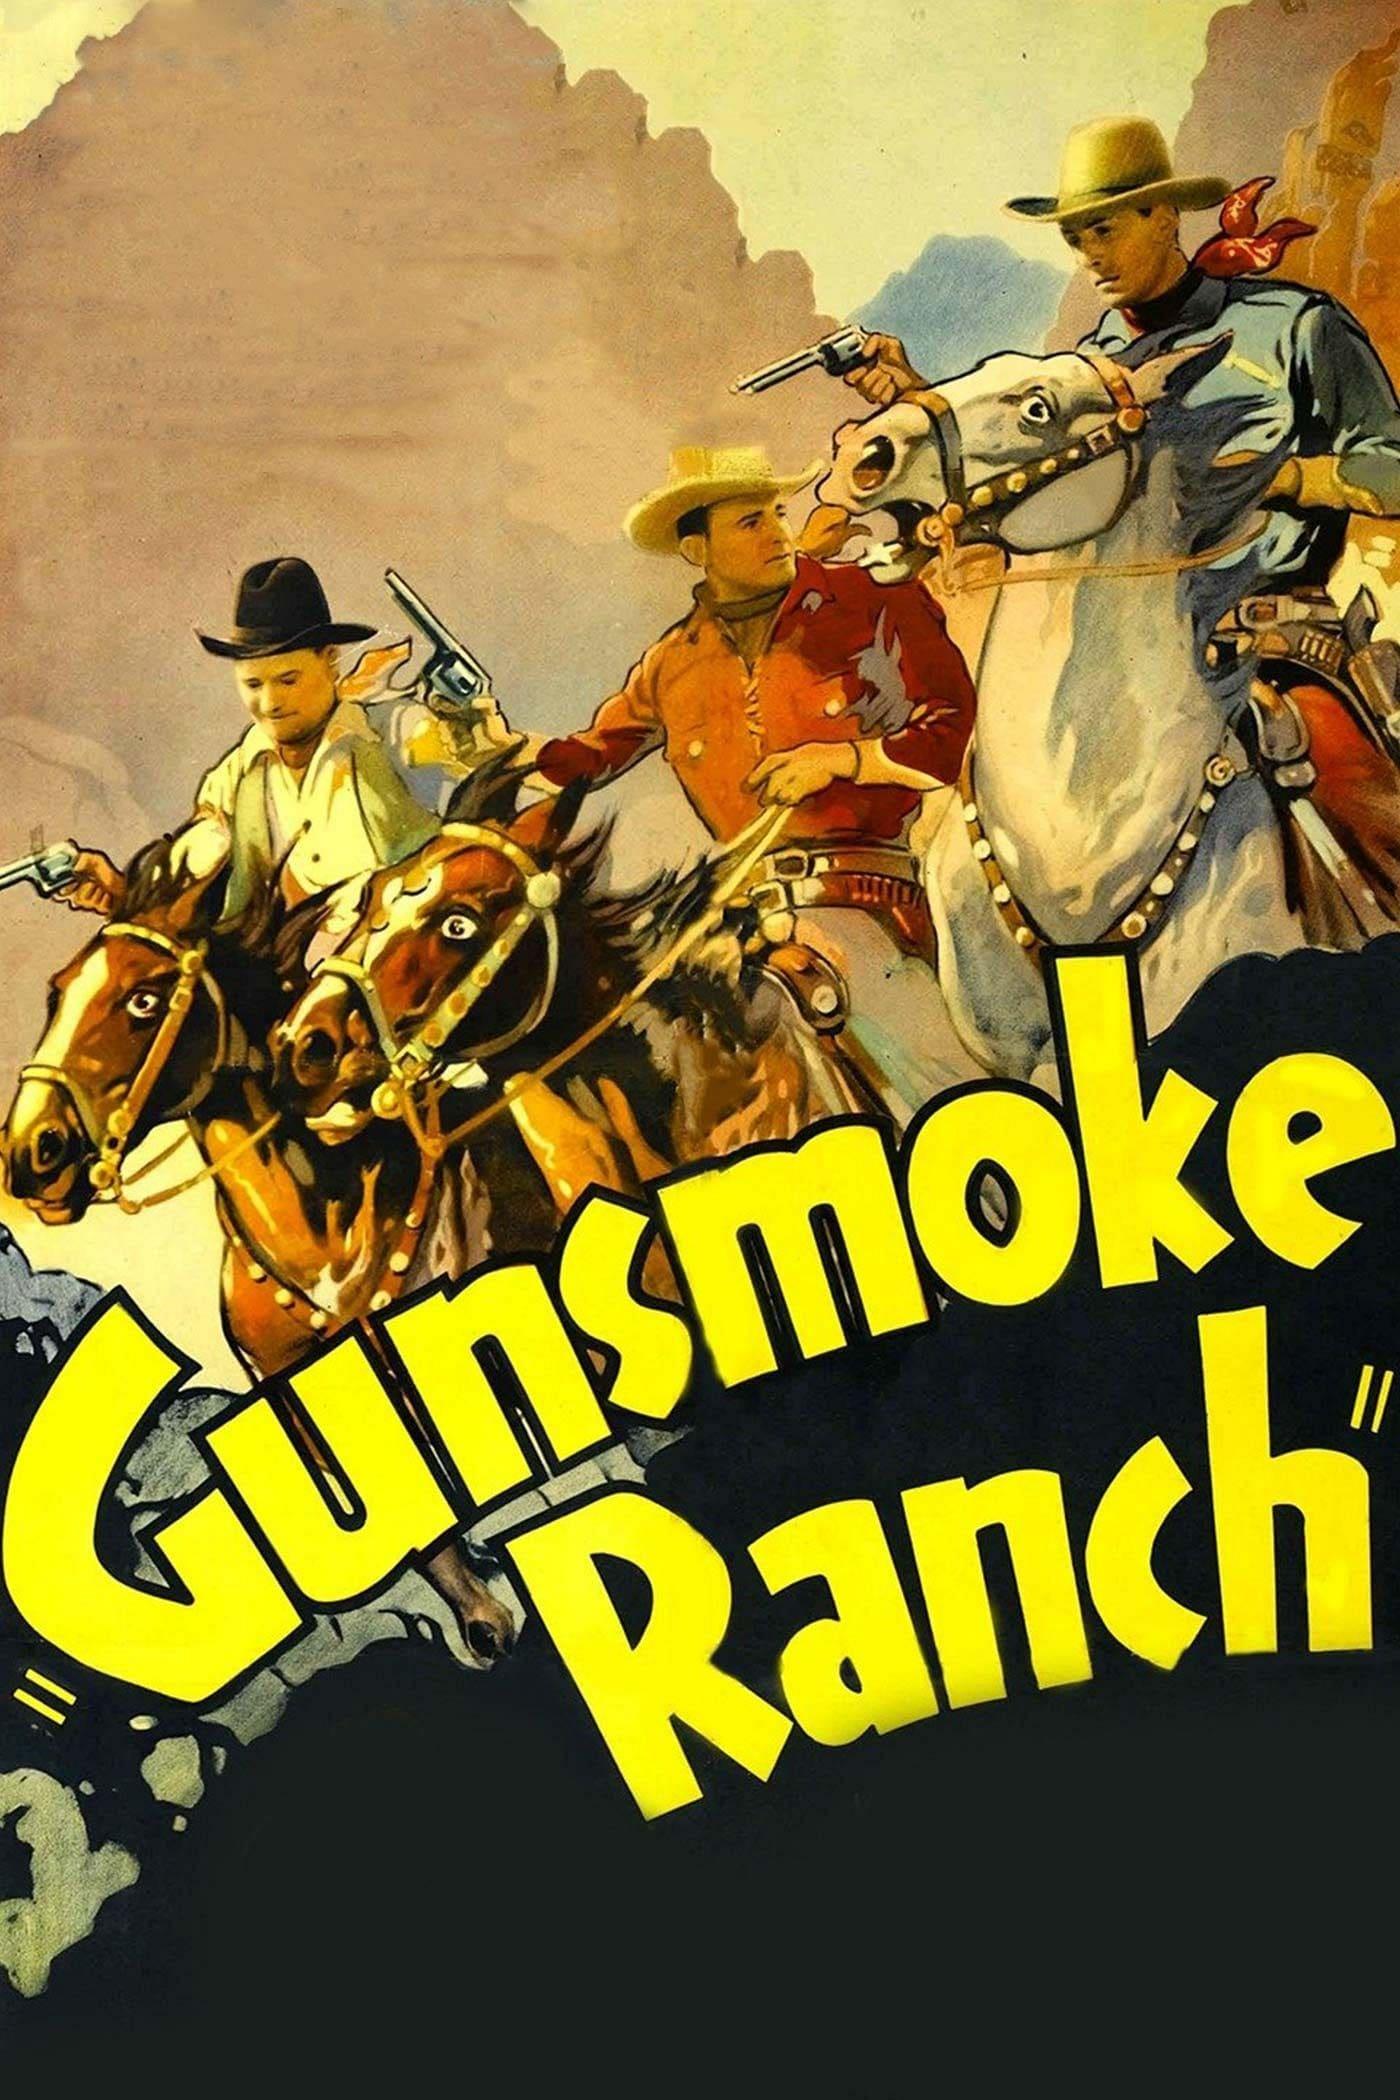 Gunsmoke Ranch poster